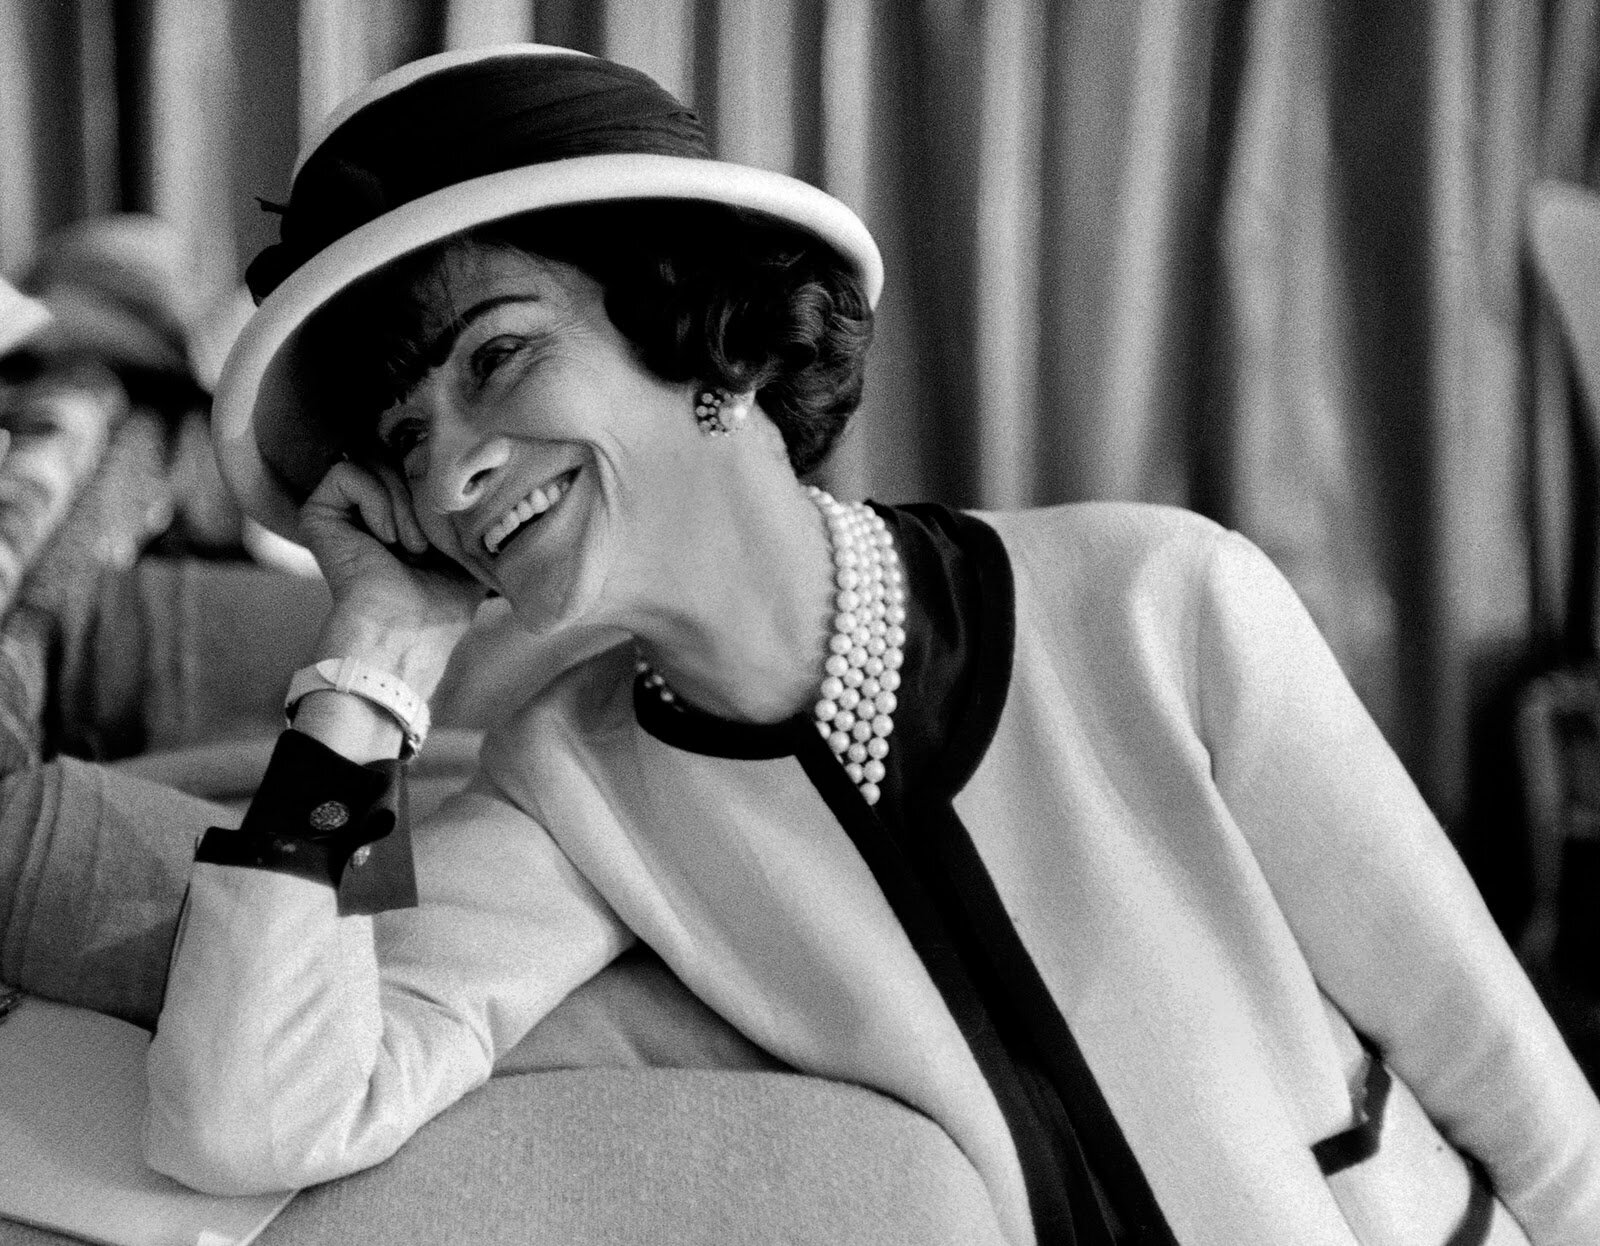 The Roaring Twenties - Fashion Through the Decades